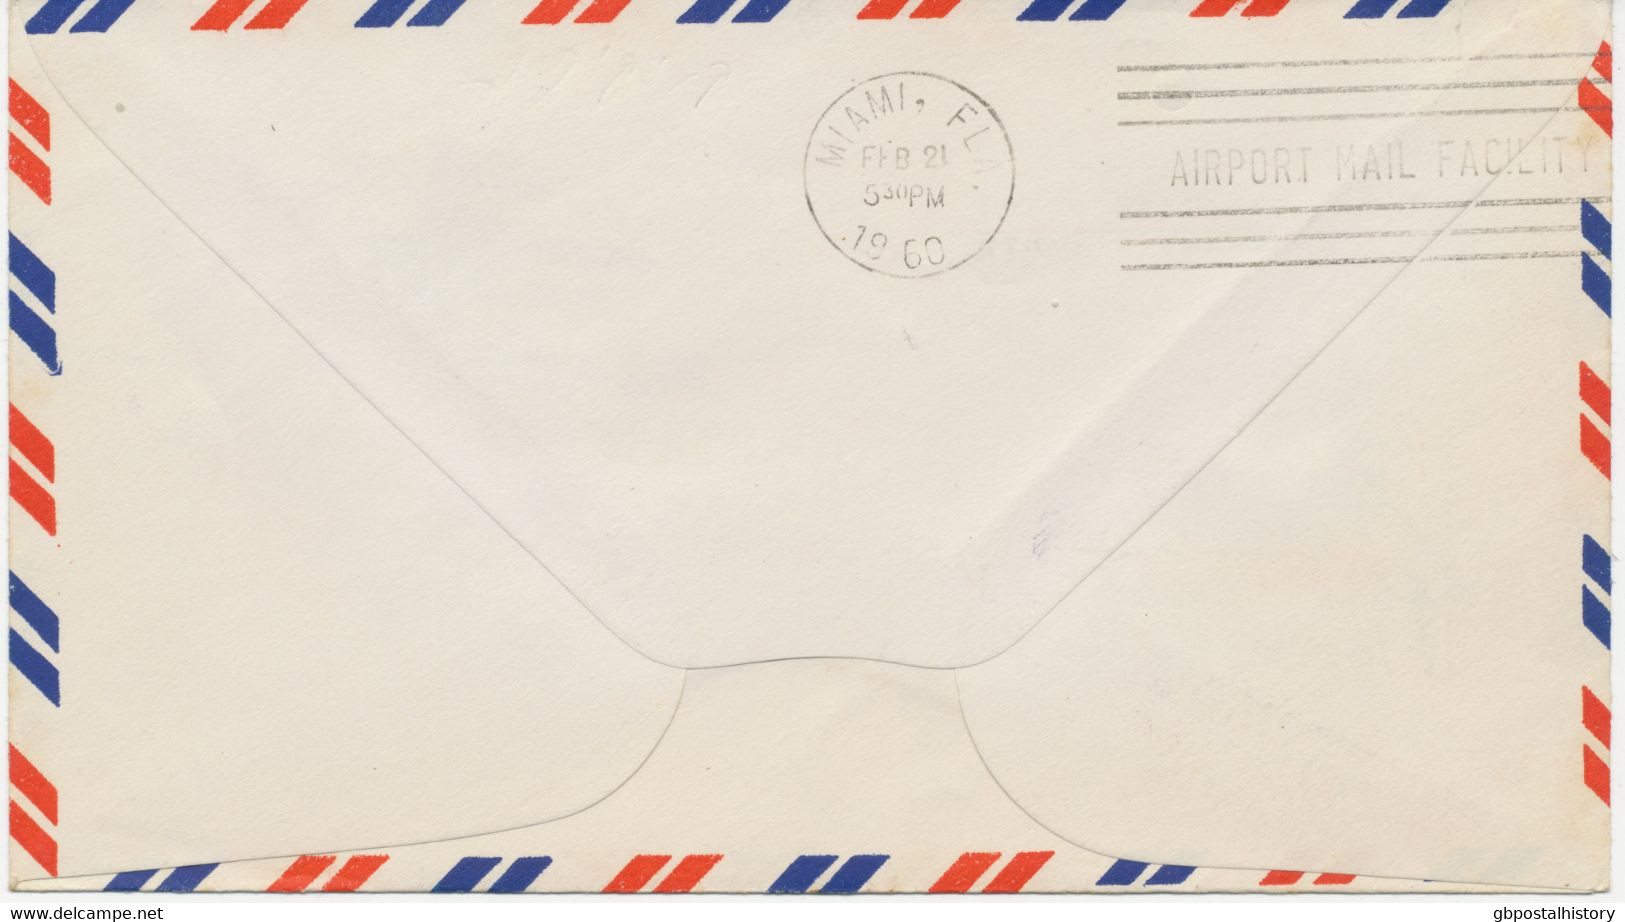 USA 1959 Kab.-Erstflug Der Eastern Air Lines DC-8B - First Jet Air Mail Service - "Chicago, Illinois - Miami, Florida" - 2c. 1941-1960 Briefe U. Dokumente